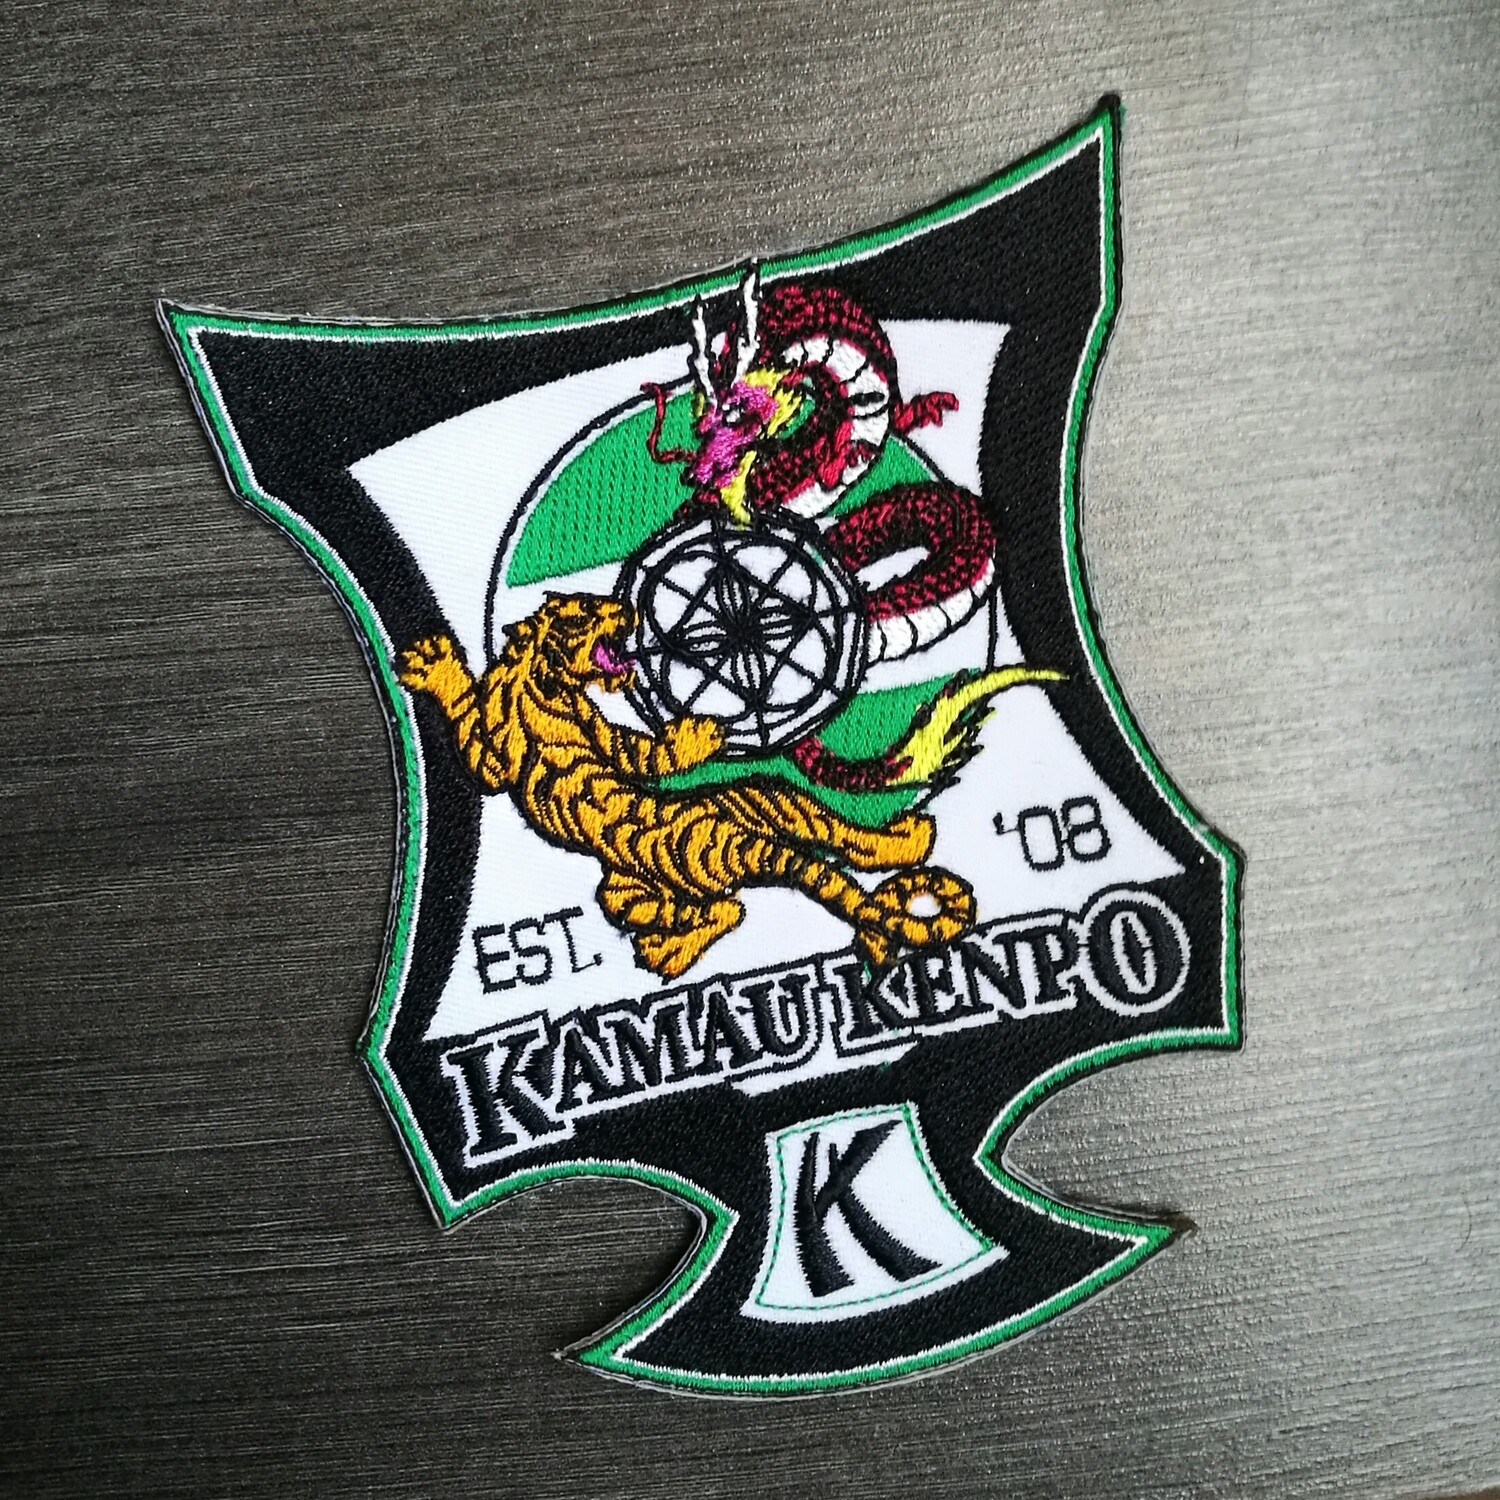 Kamau Kenpo Club patches